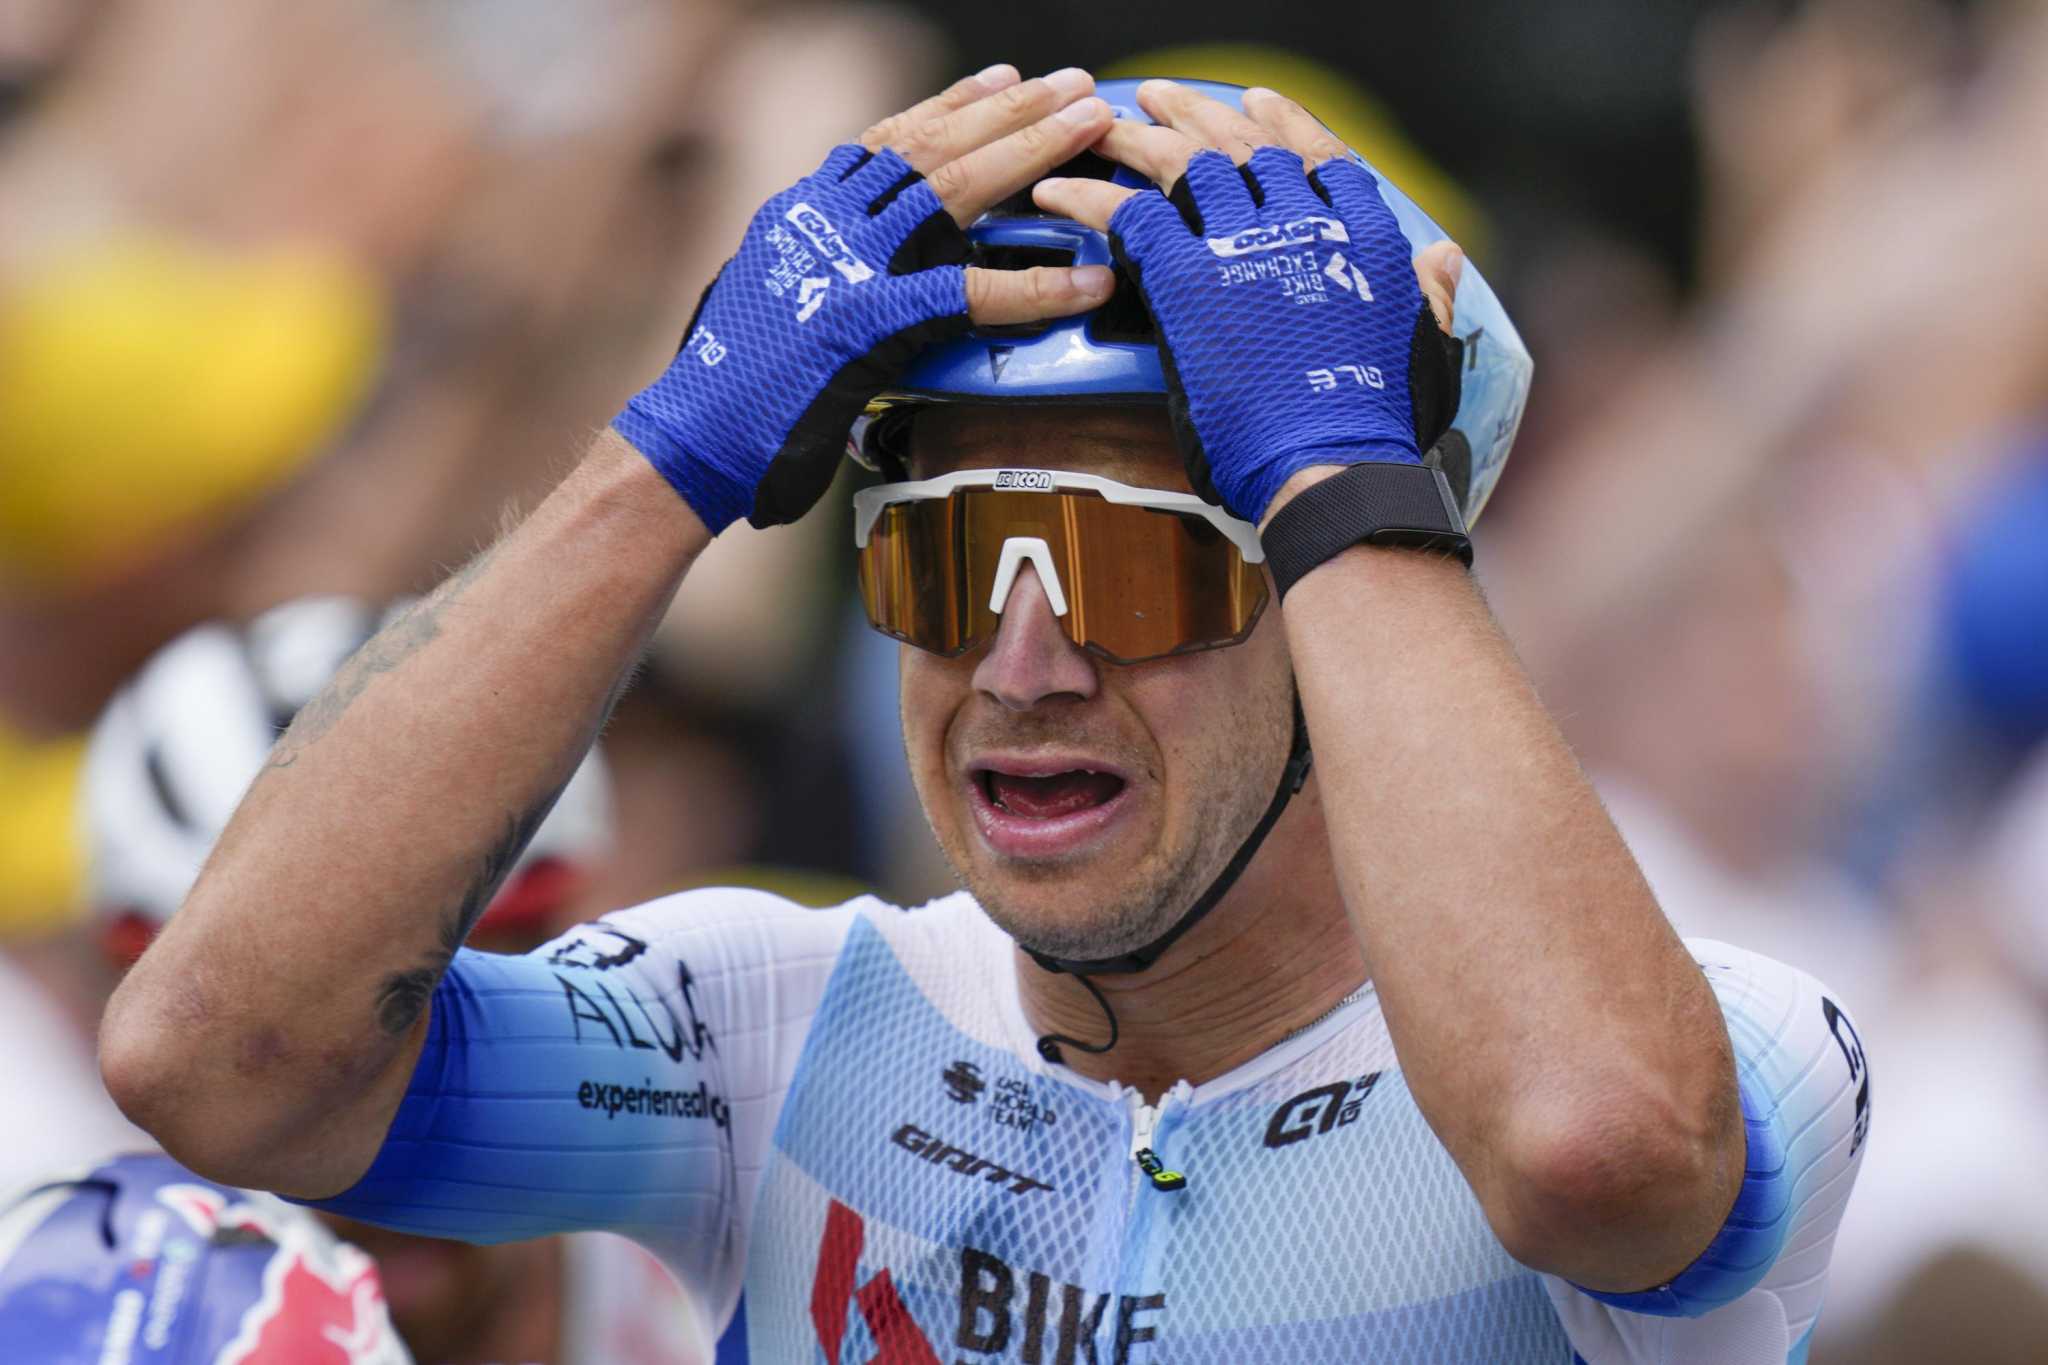 Nederlandse renner Groenewegen wint 3e etappe Tour de France